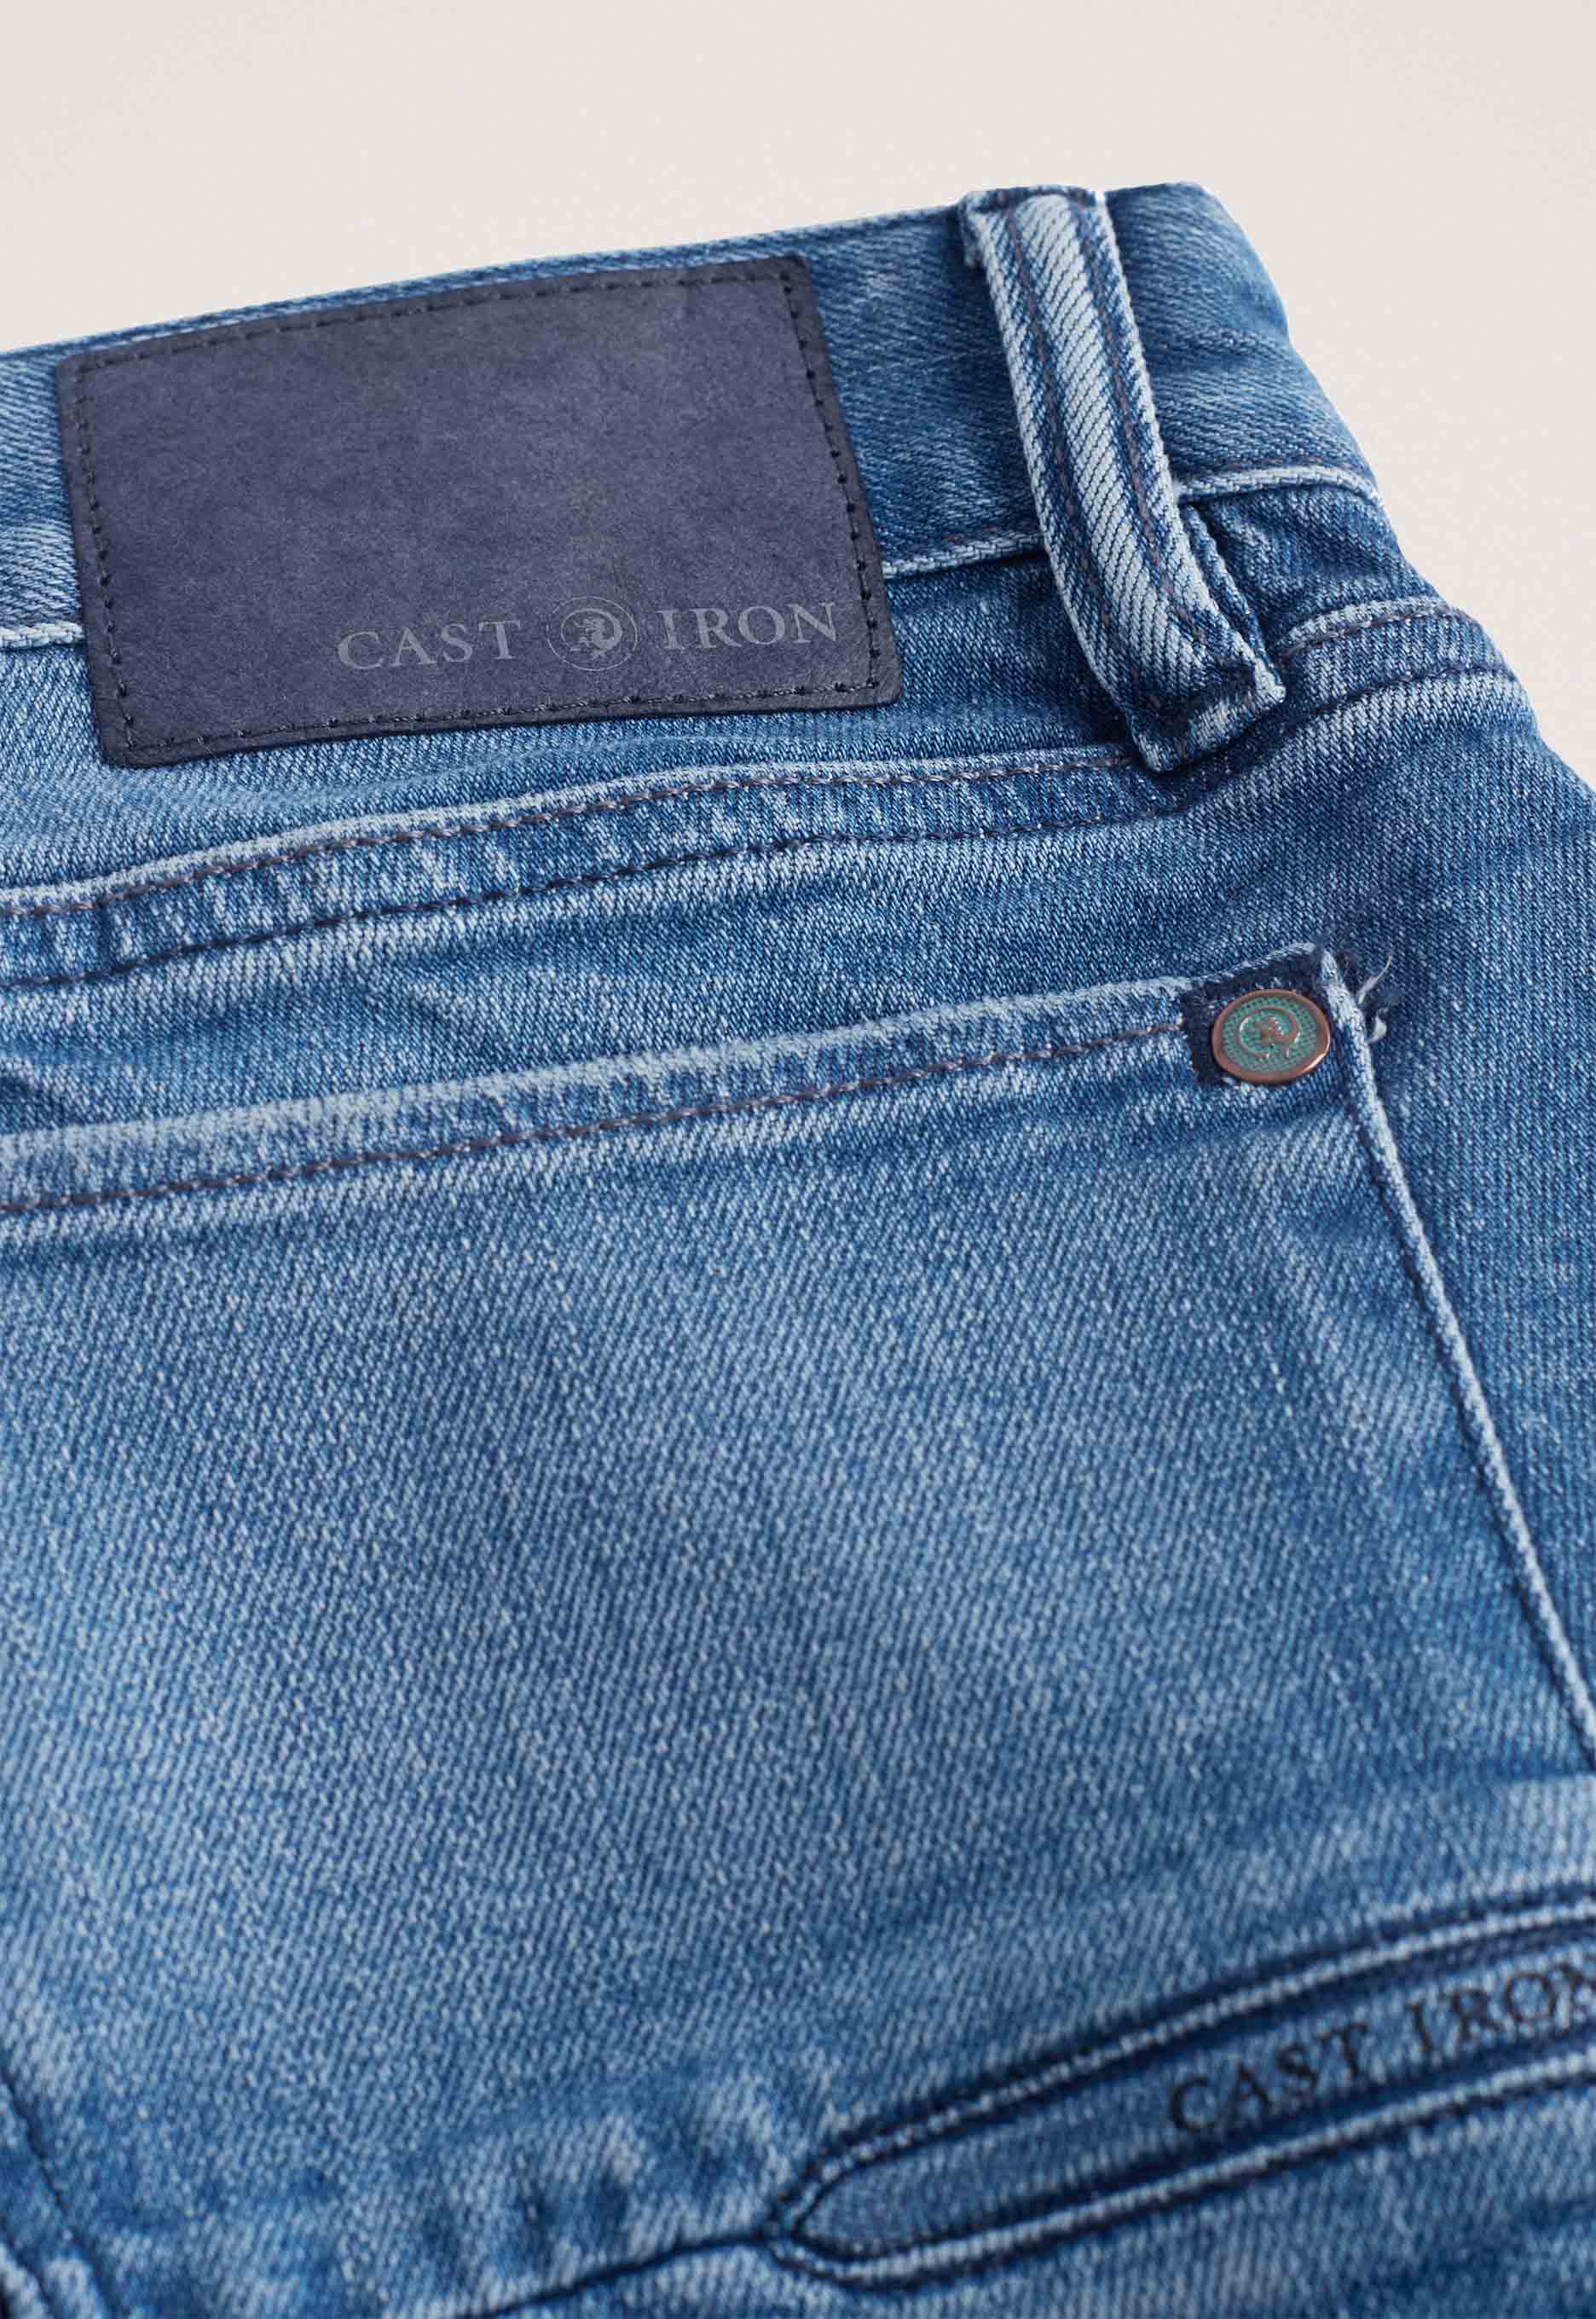 Cast Iron Riser Slim Jeans